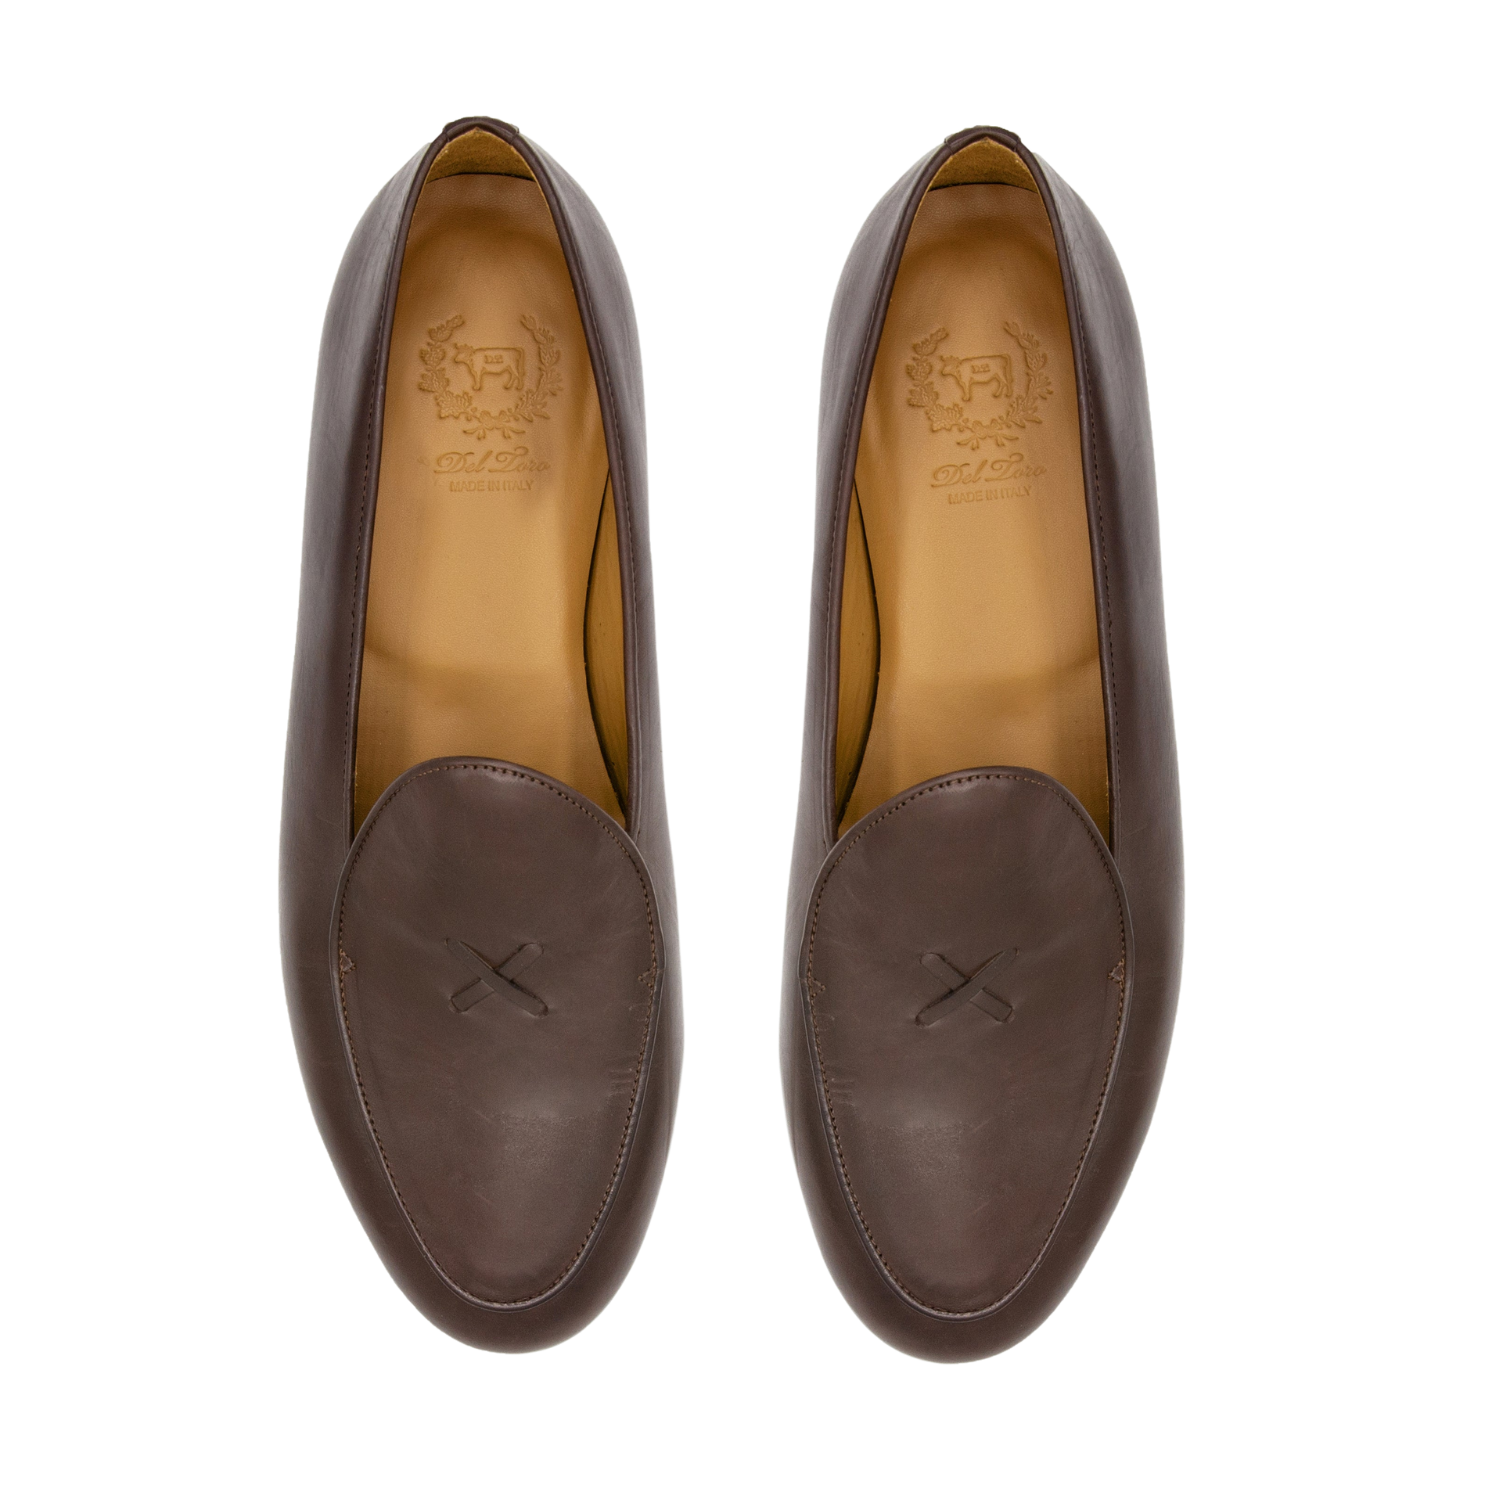 Del Toro Men's Brown Leather Milano Loafer